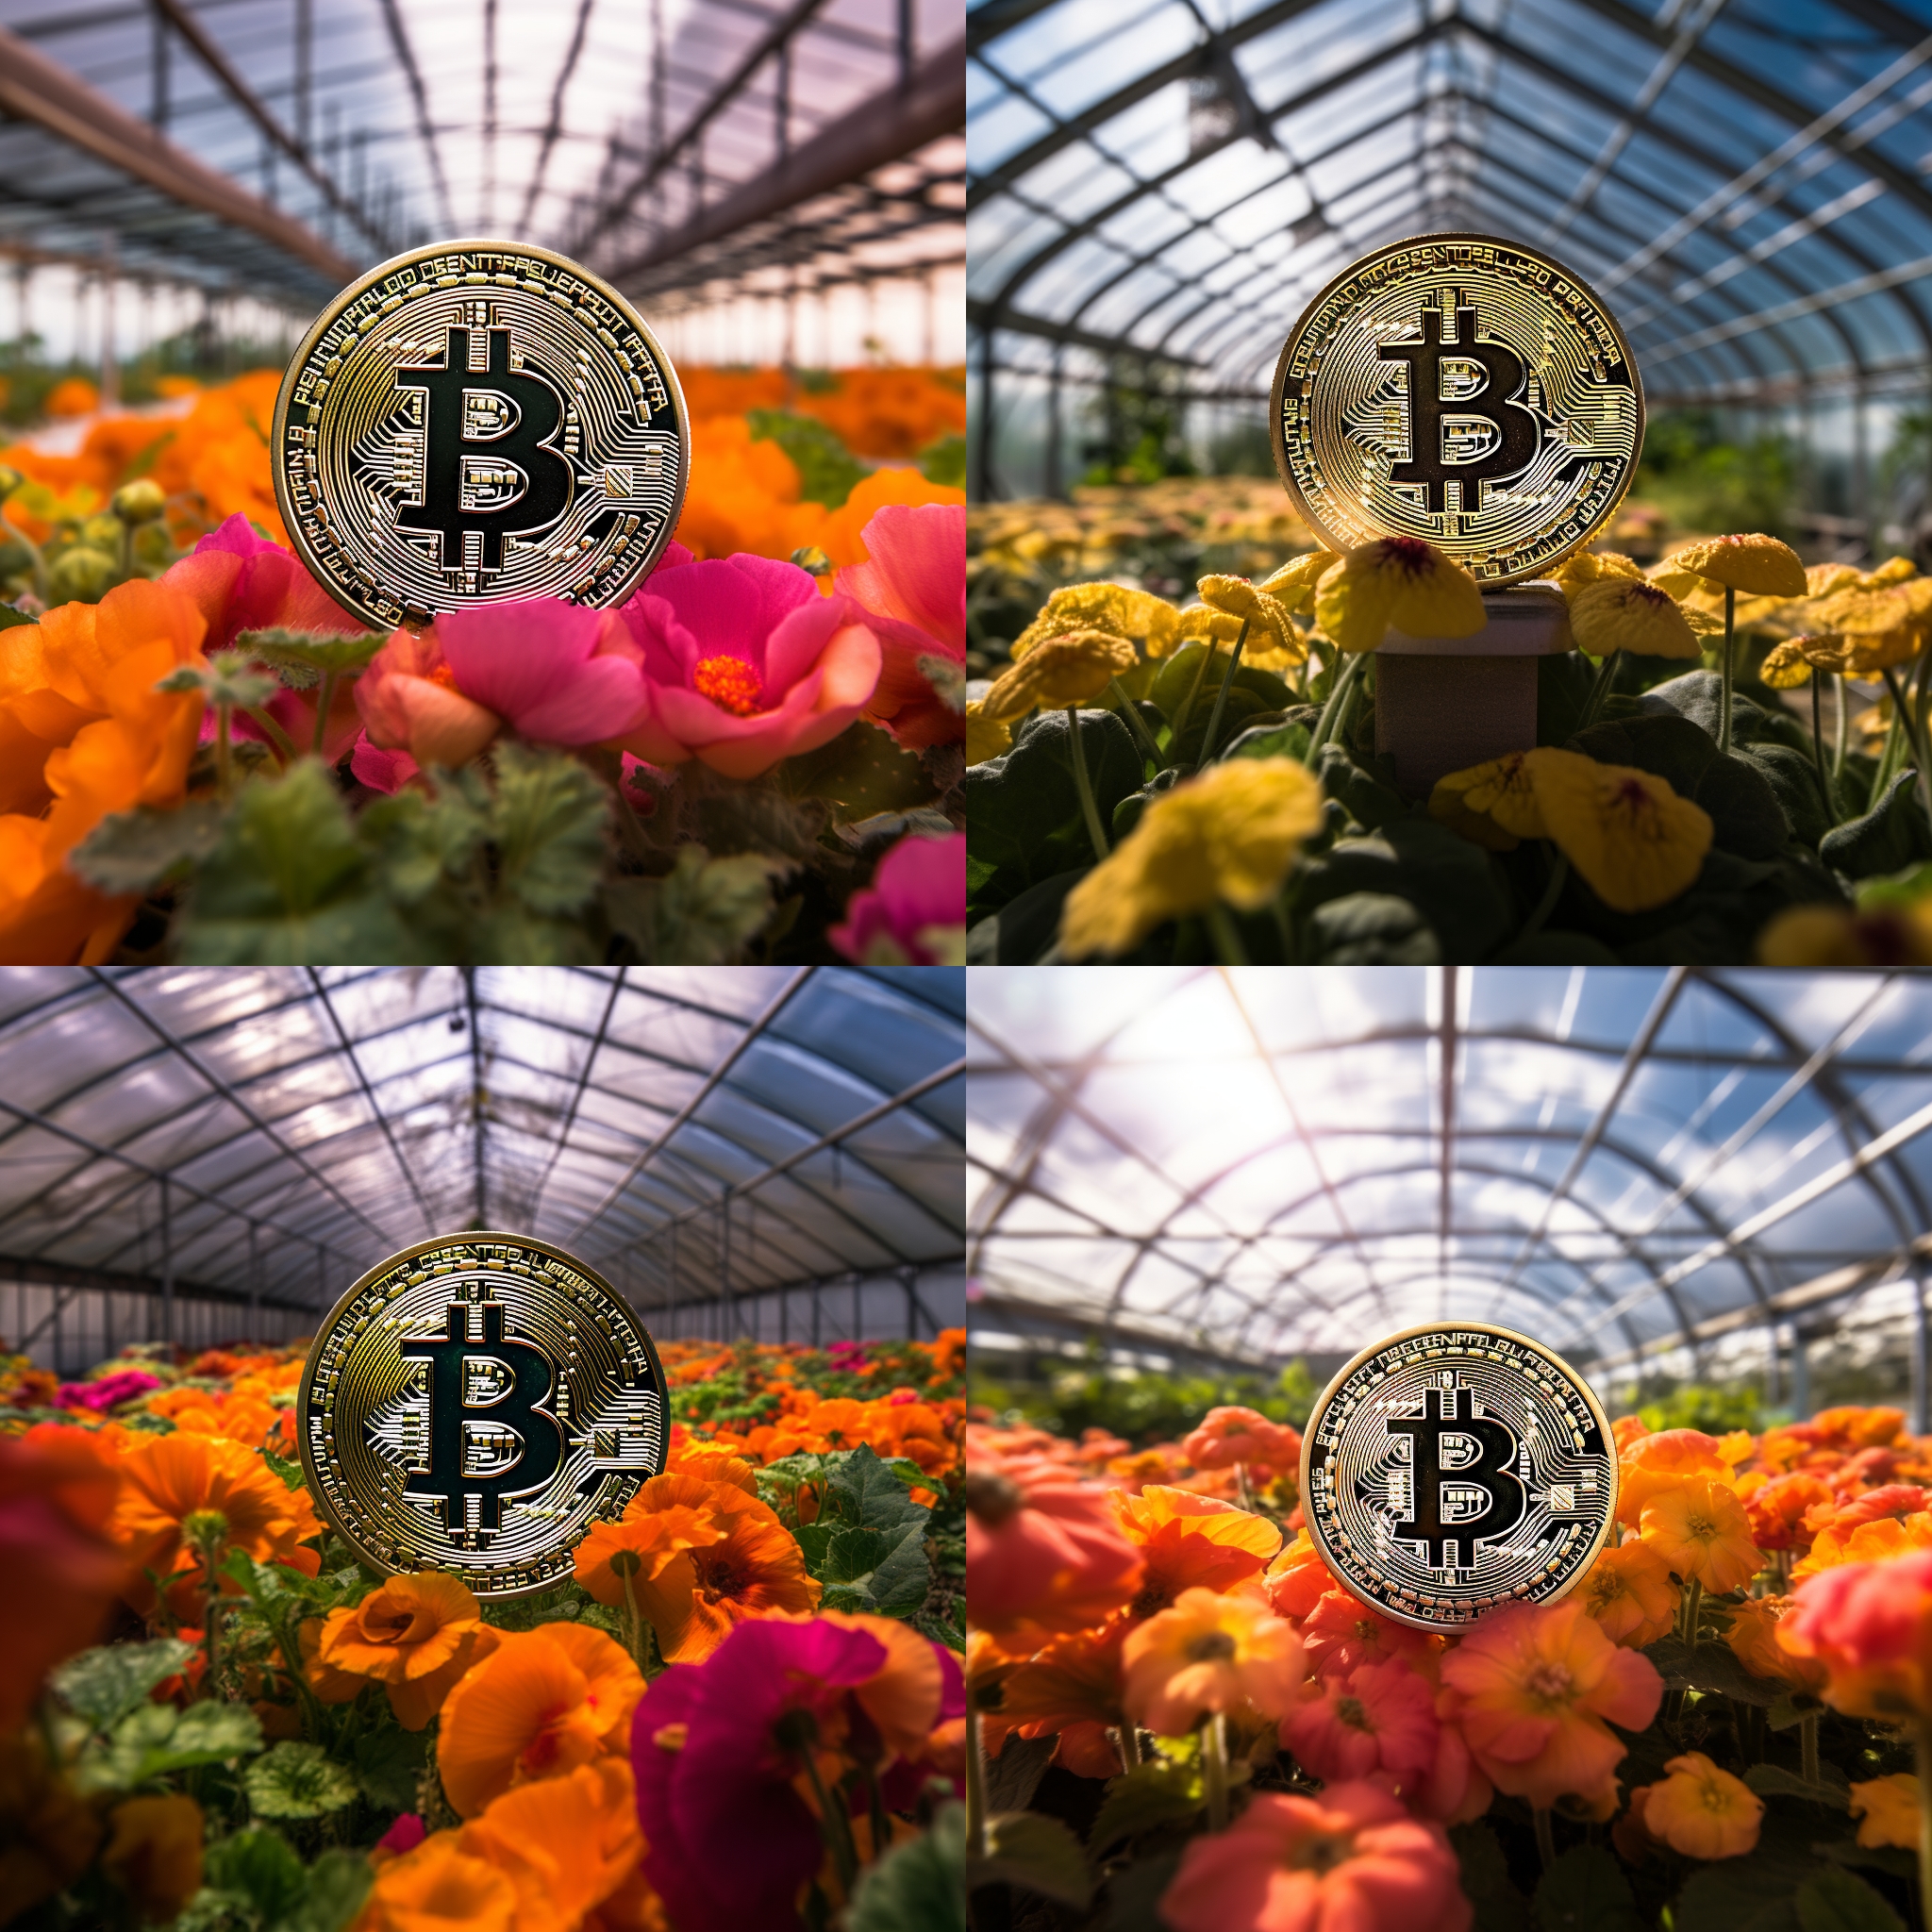 Using bitcoin mining heat to heat greenhouses